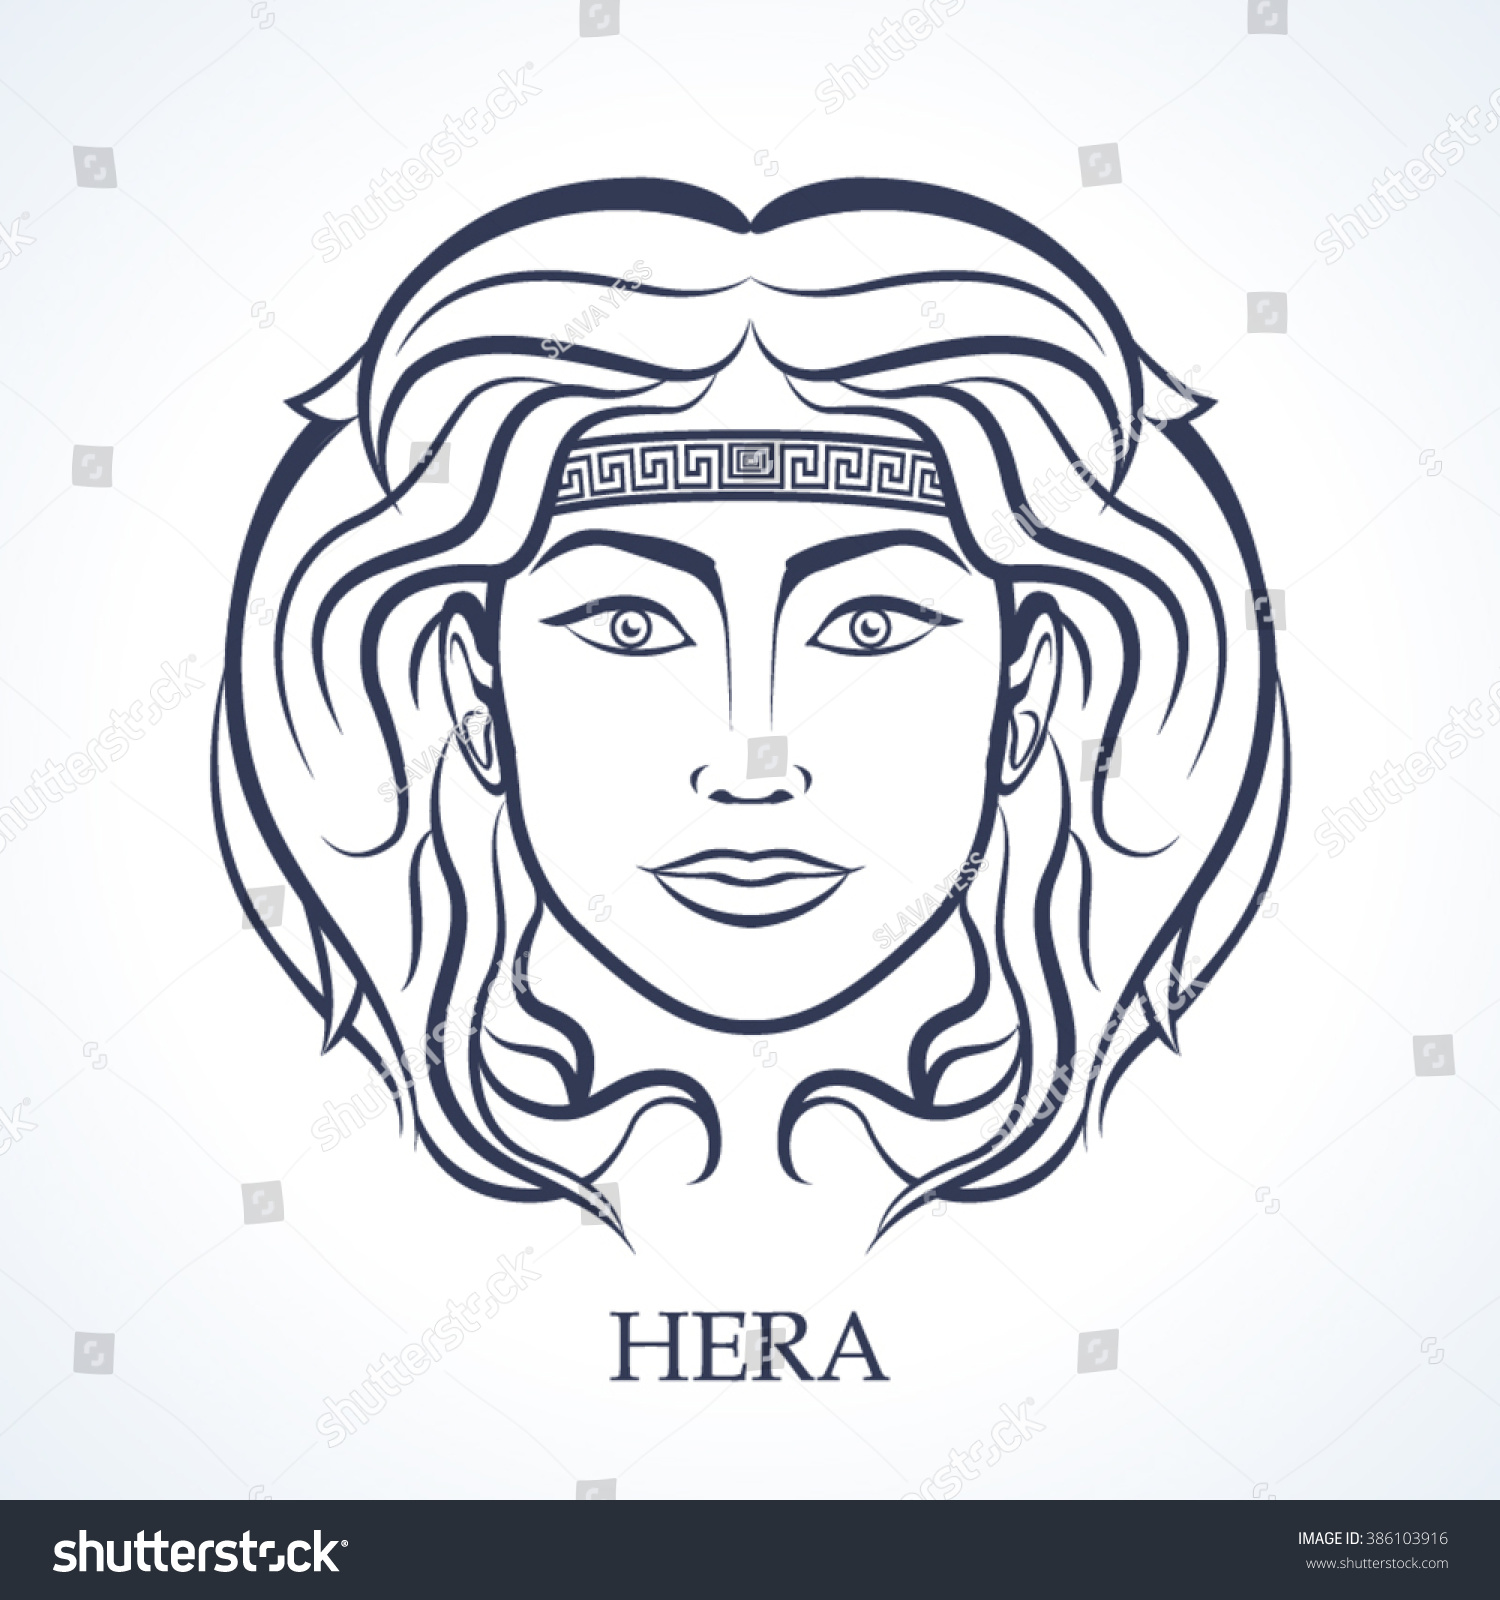 Hera girl голова